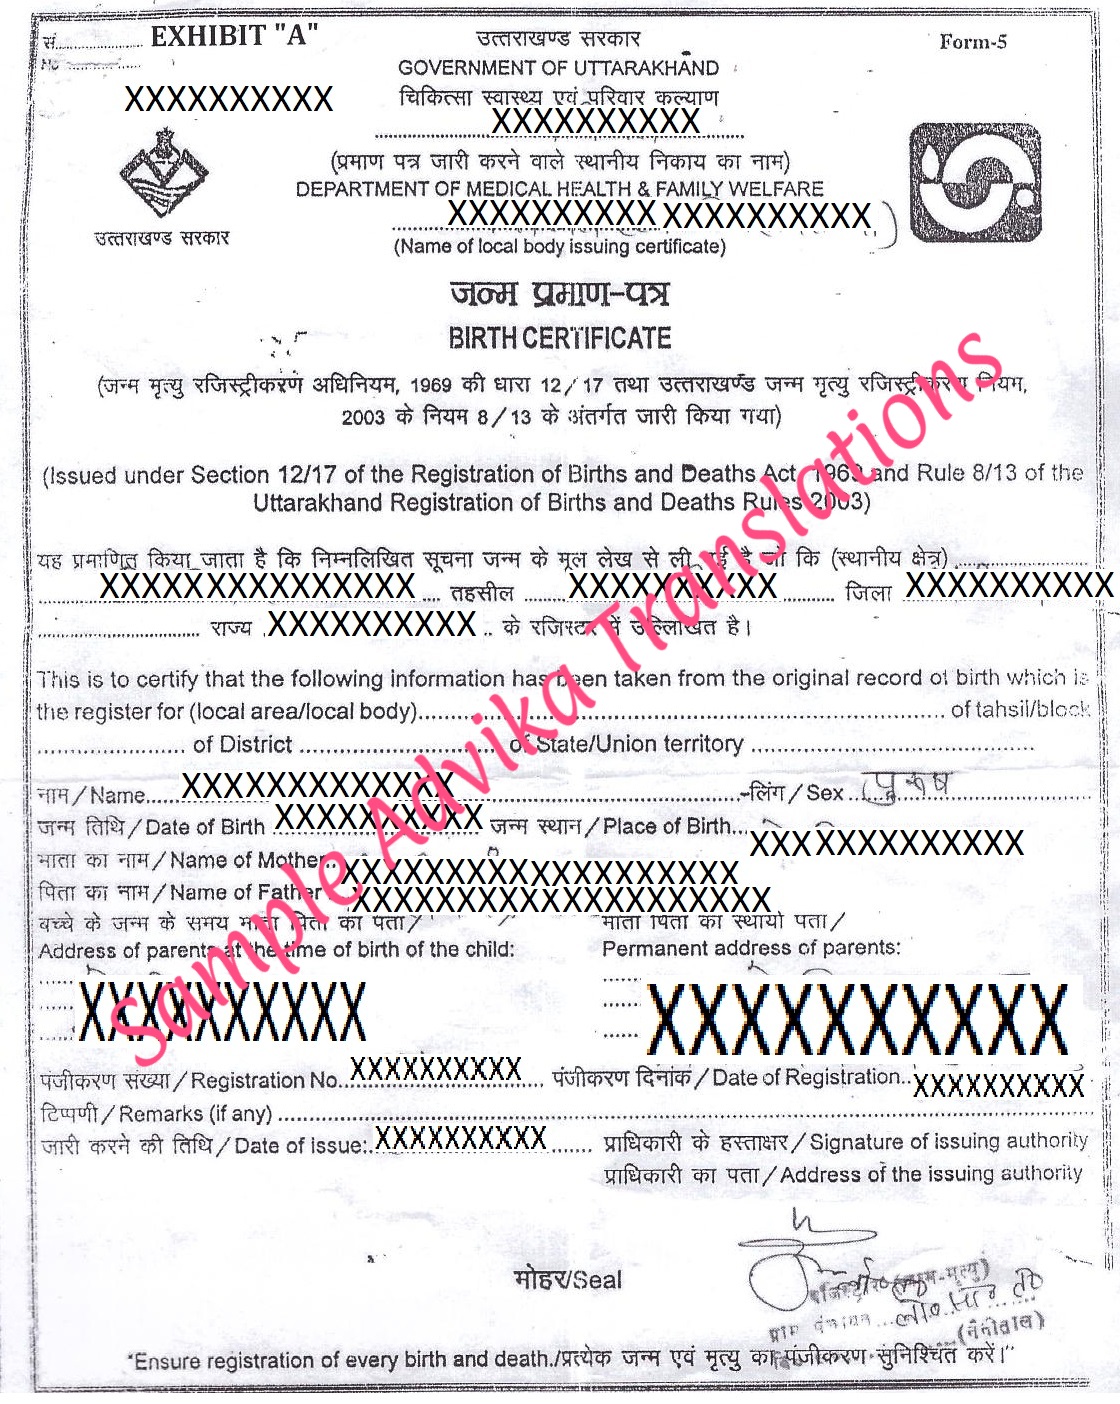 Online Birth Certificate Bihar Gov Jetderive